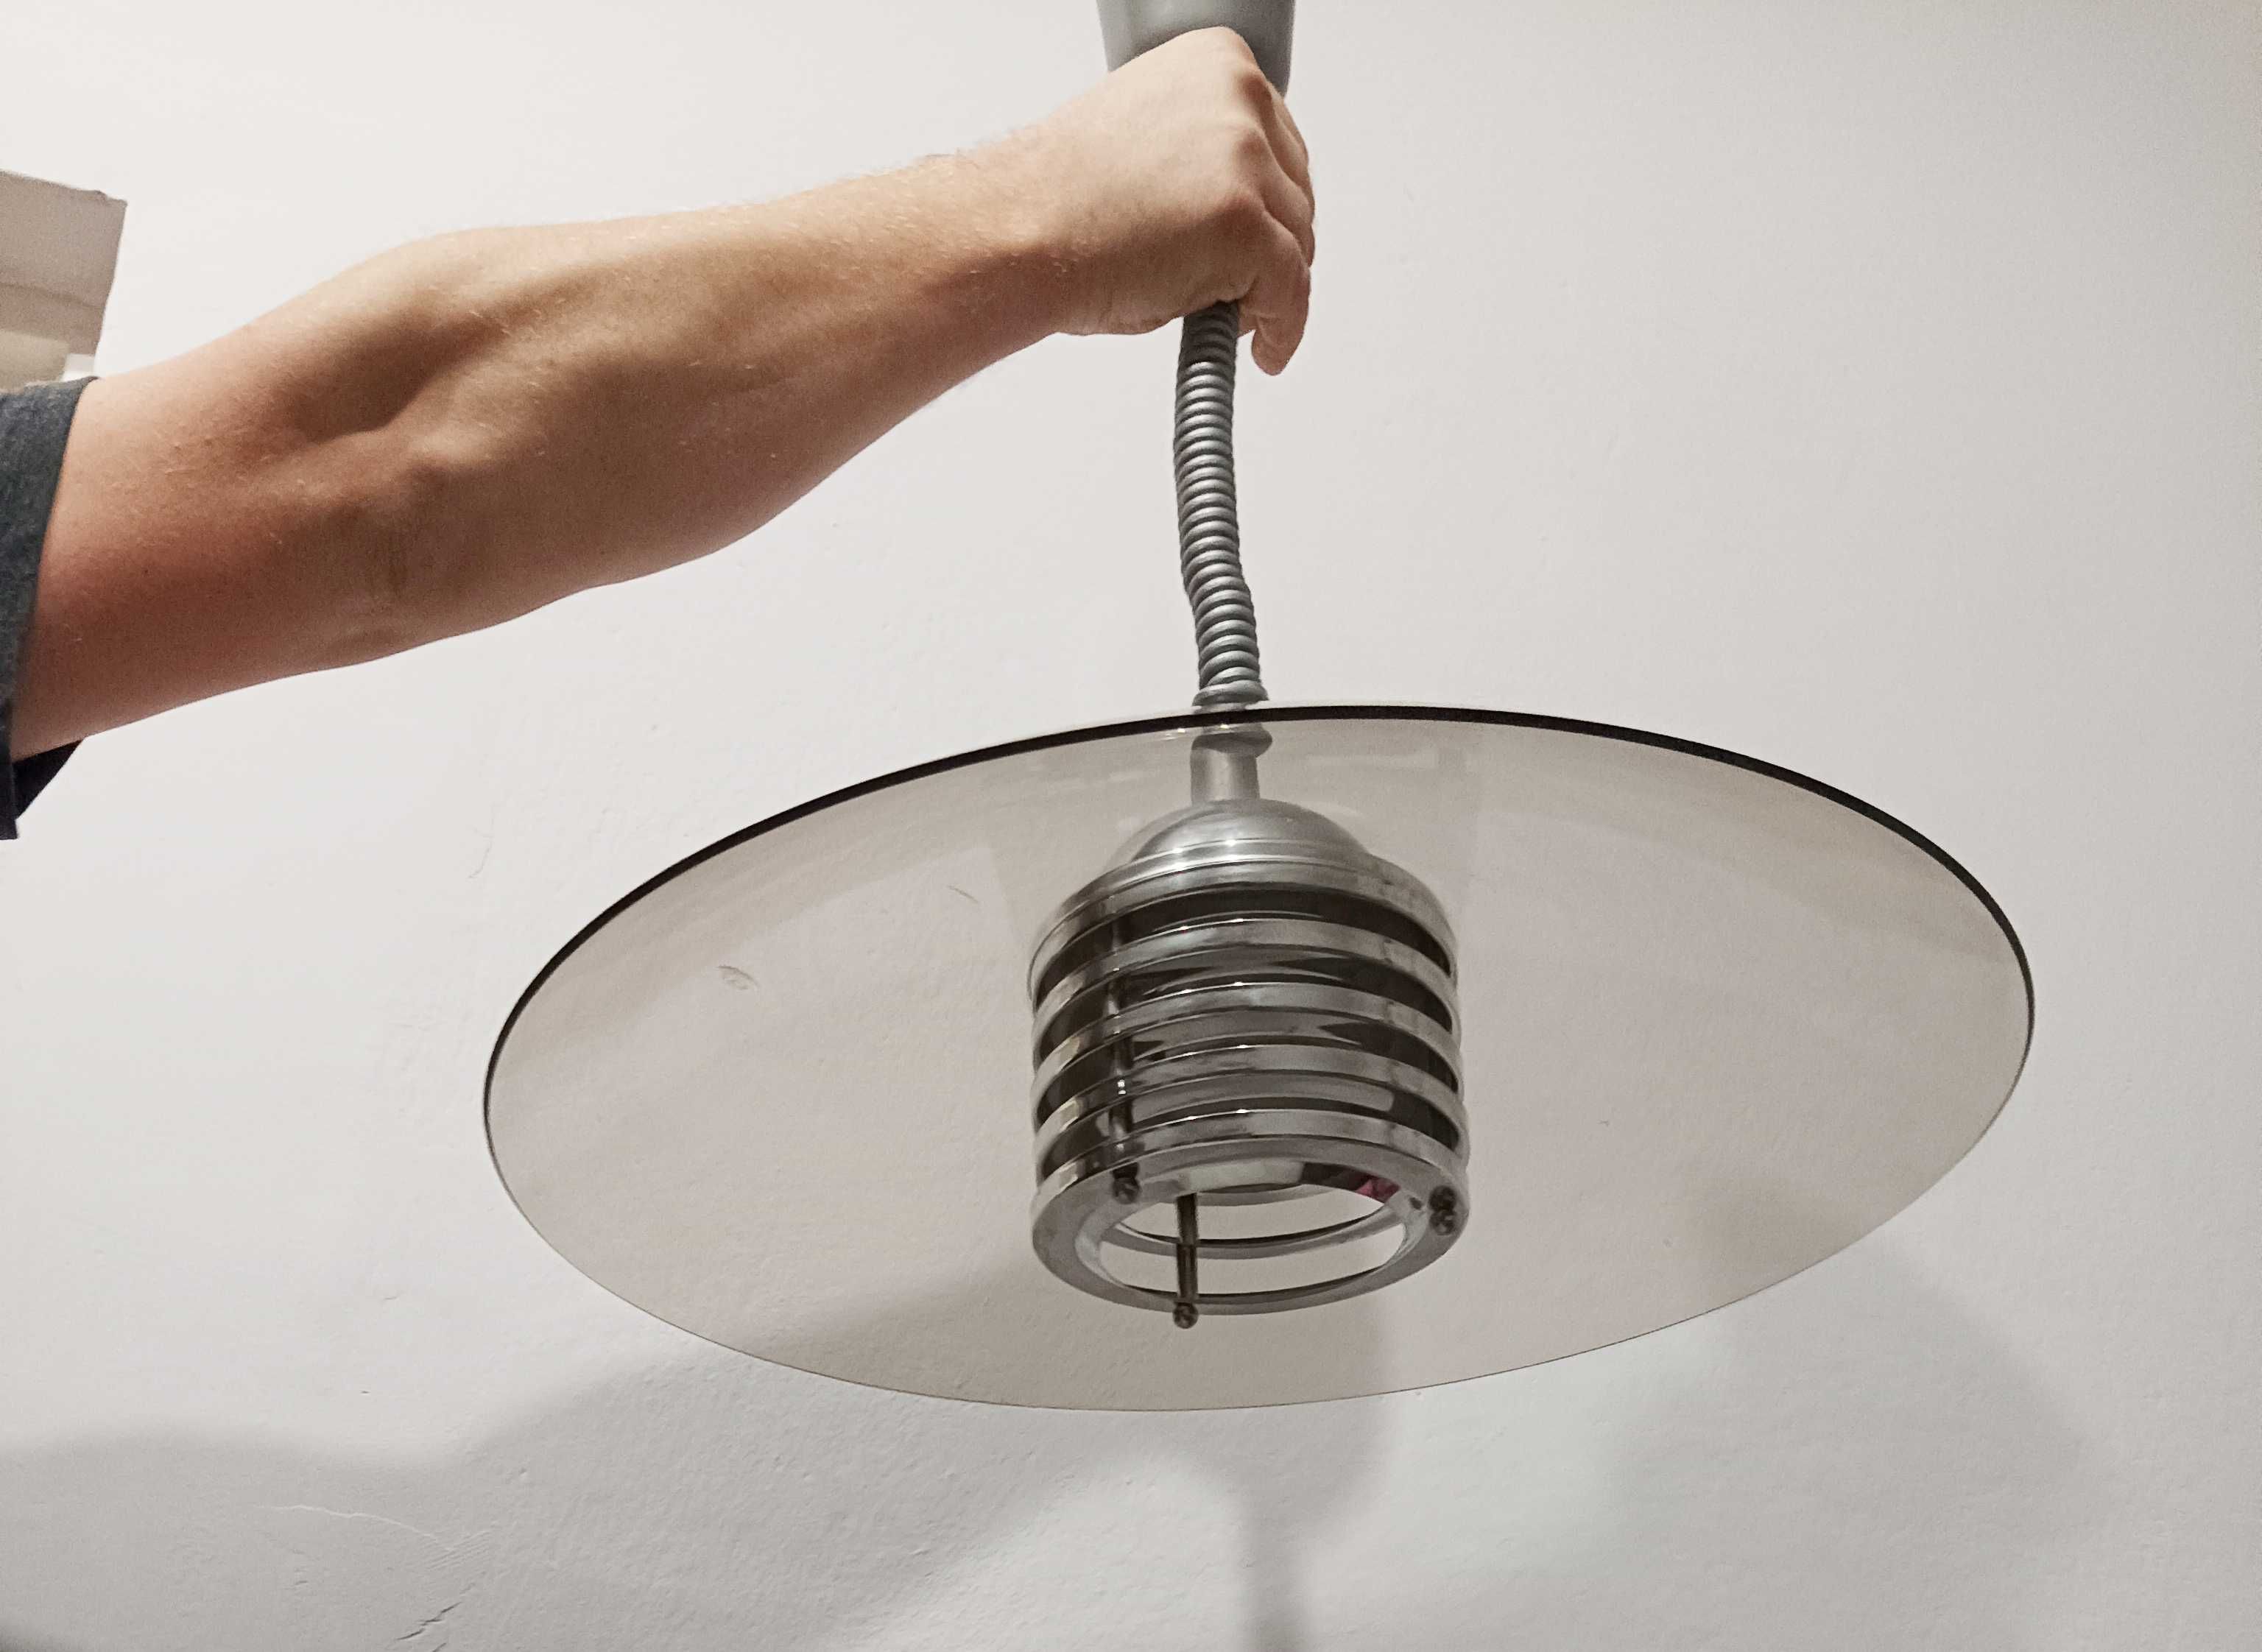 Żyrandol lampa wisząca regulowana np do kuchni